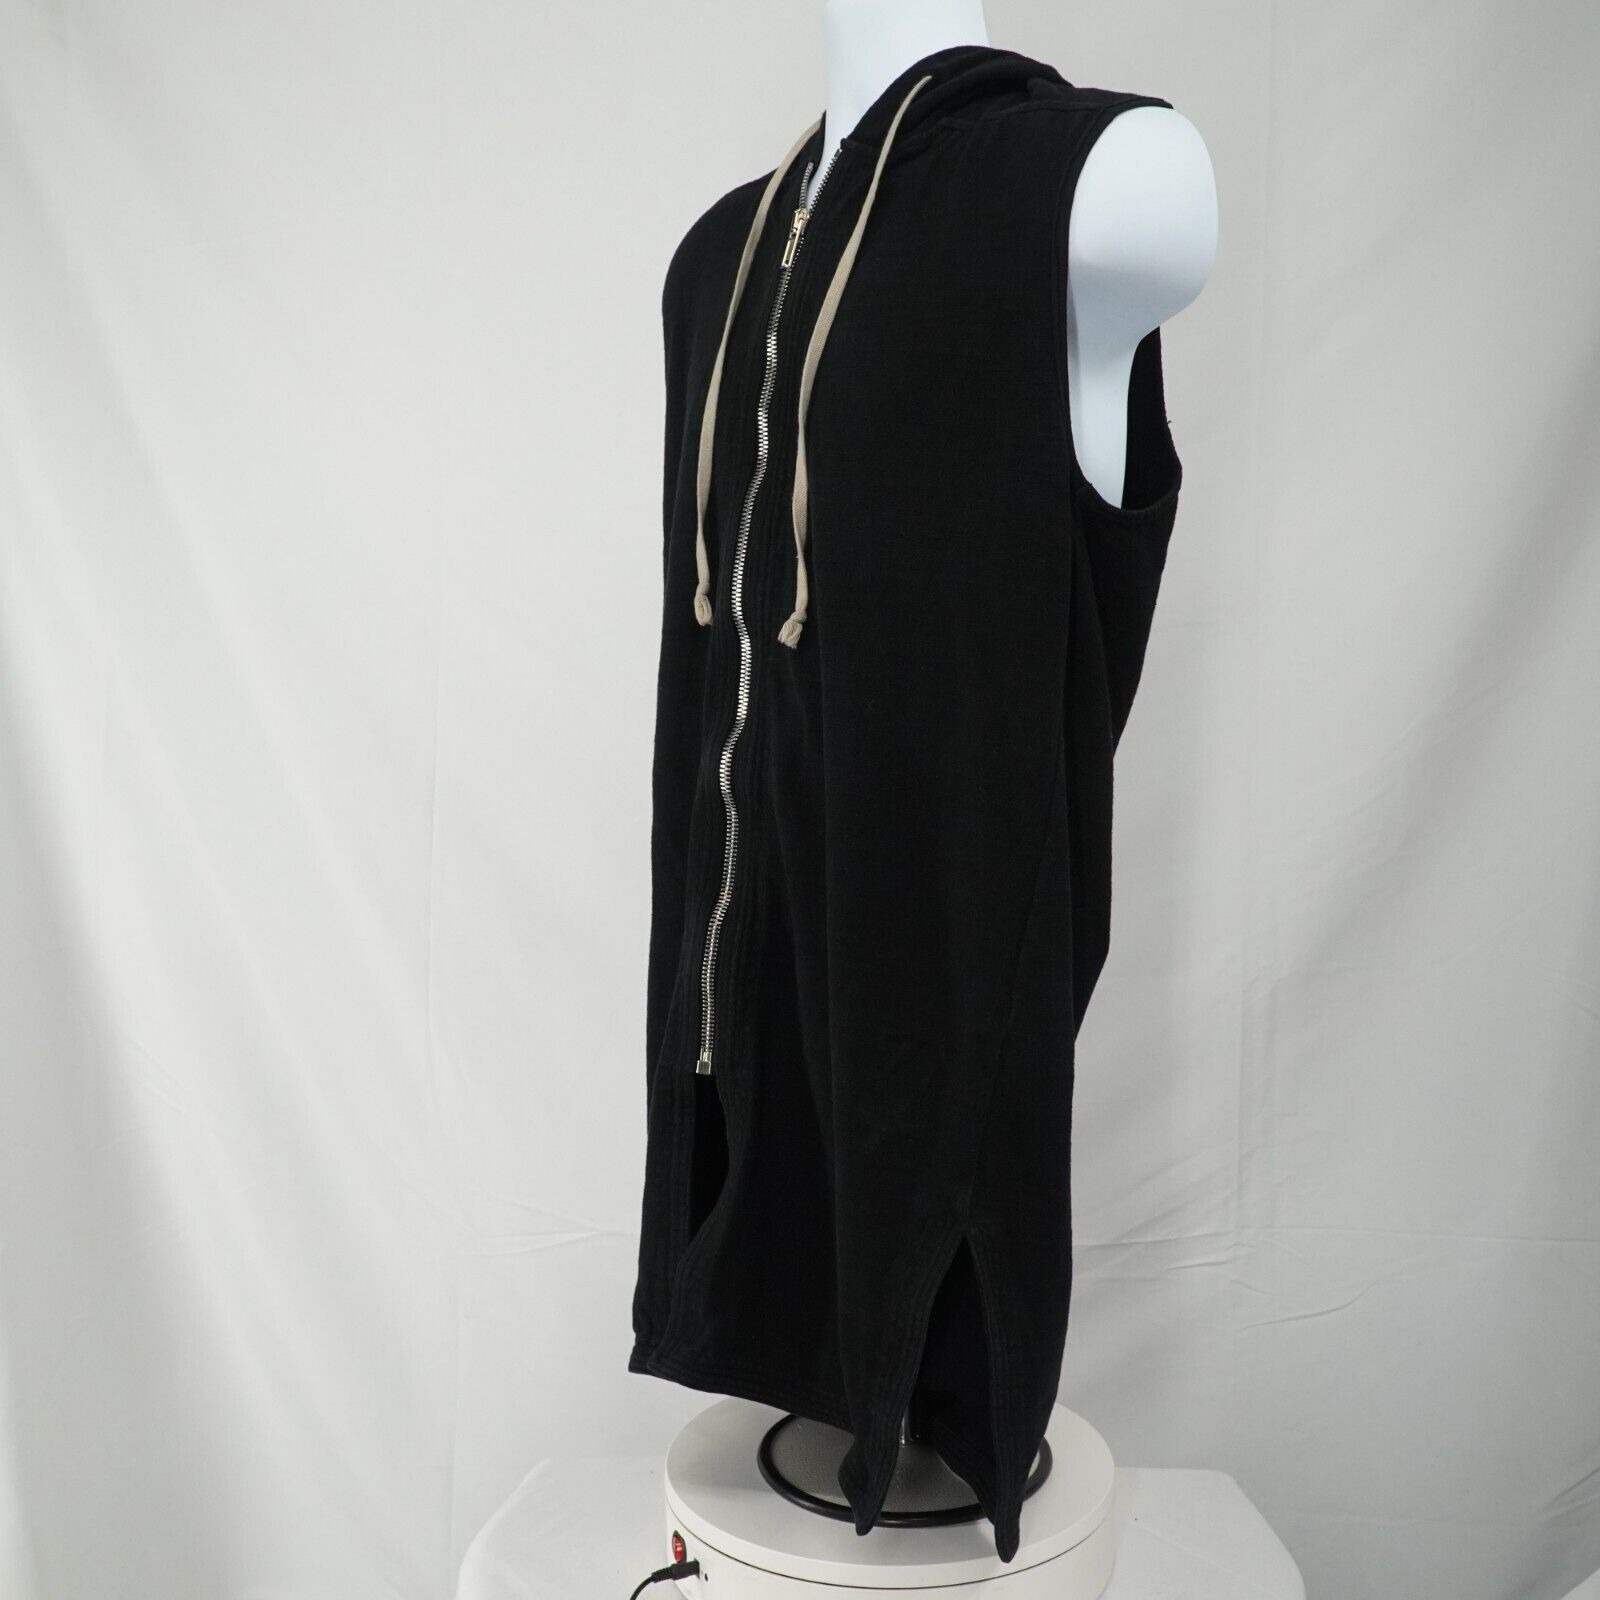 Black Zip Up Sleeveless Jacket Hoodie Cotton - Medium - 9